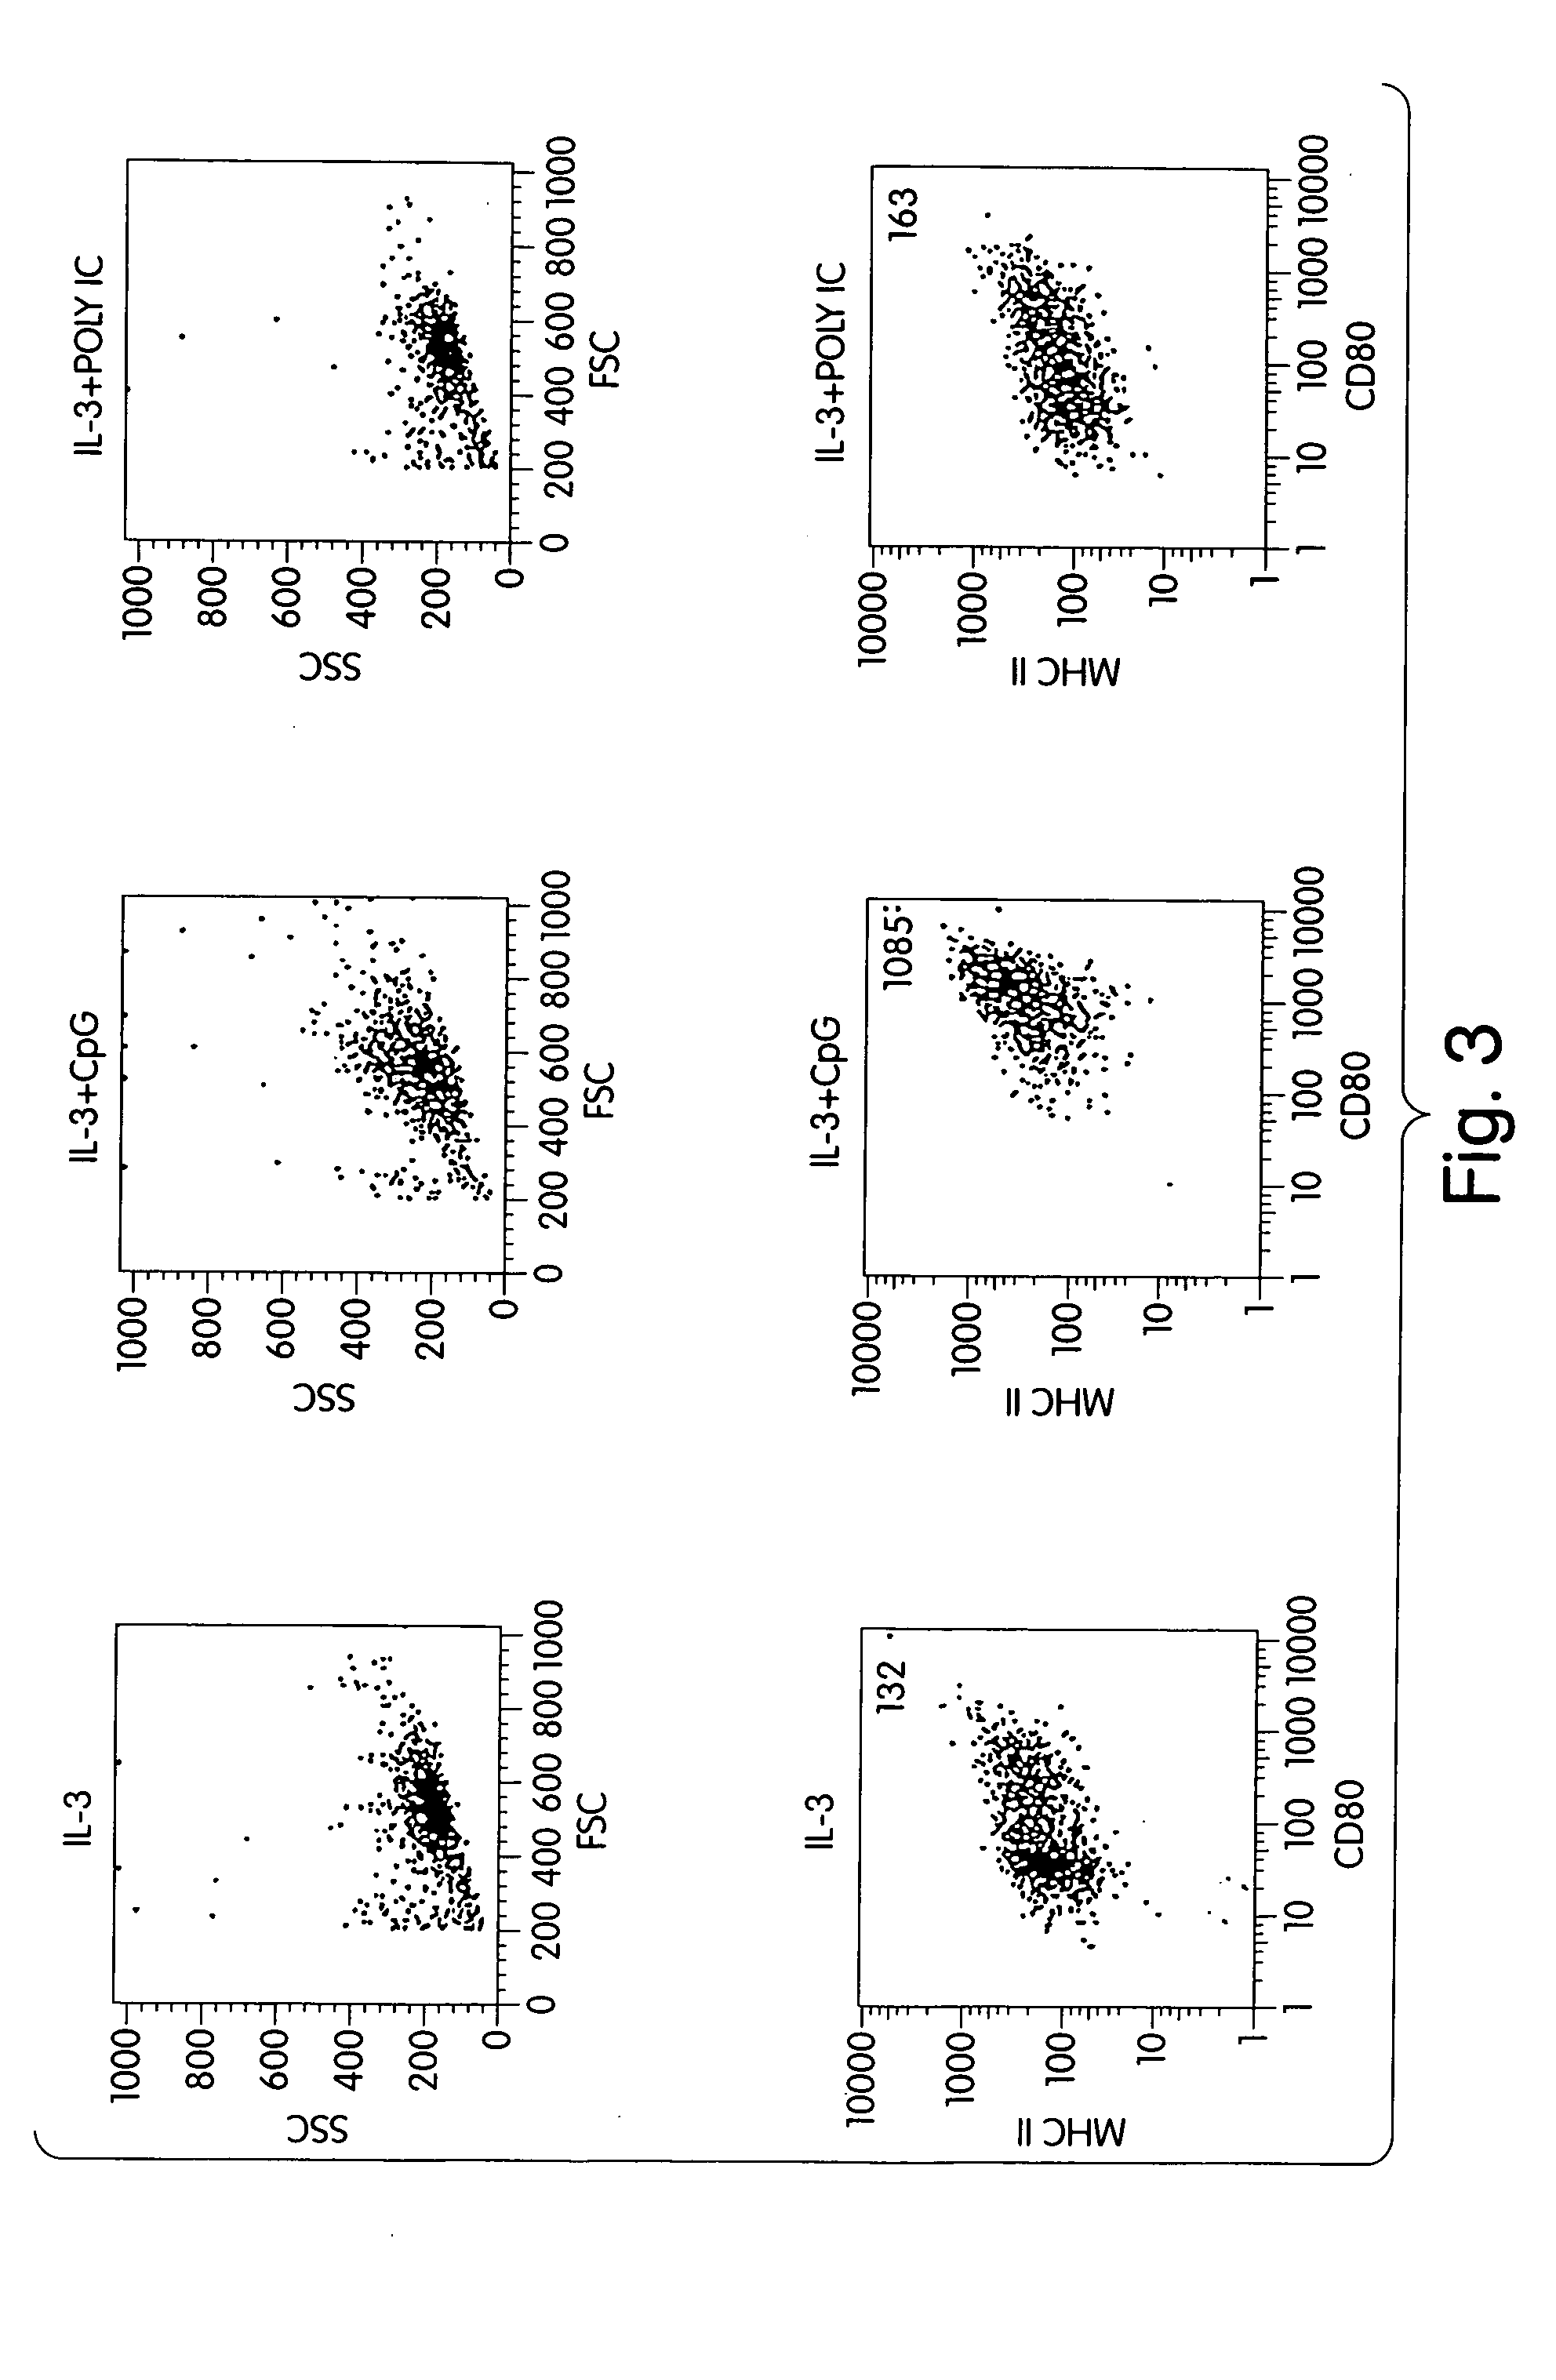 Methods related to immunostimulatory nucleic acid-induced interferon